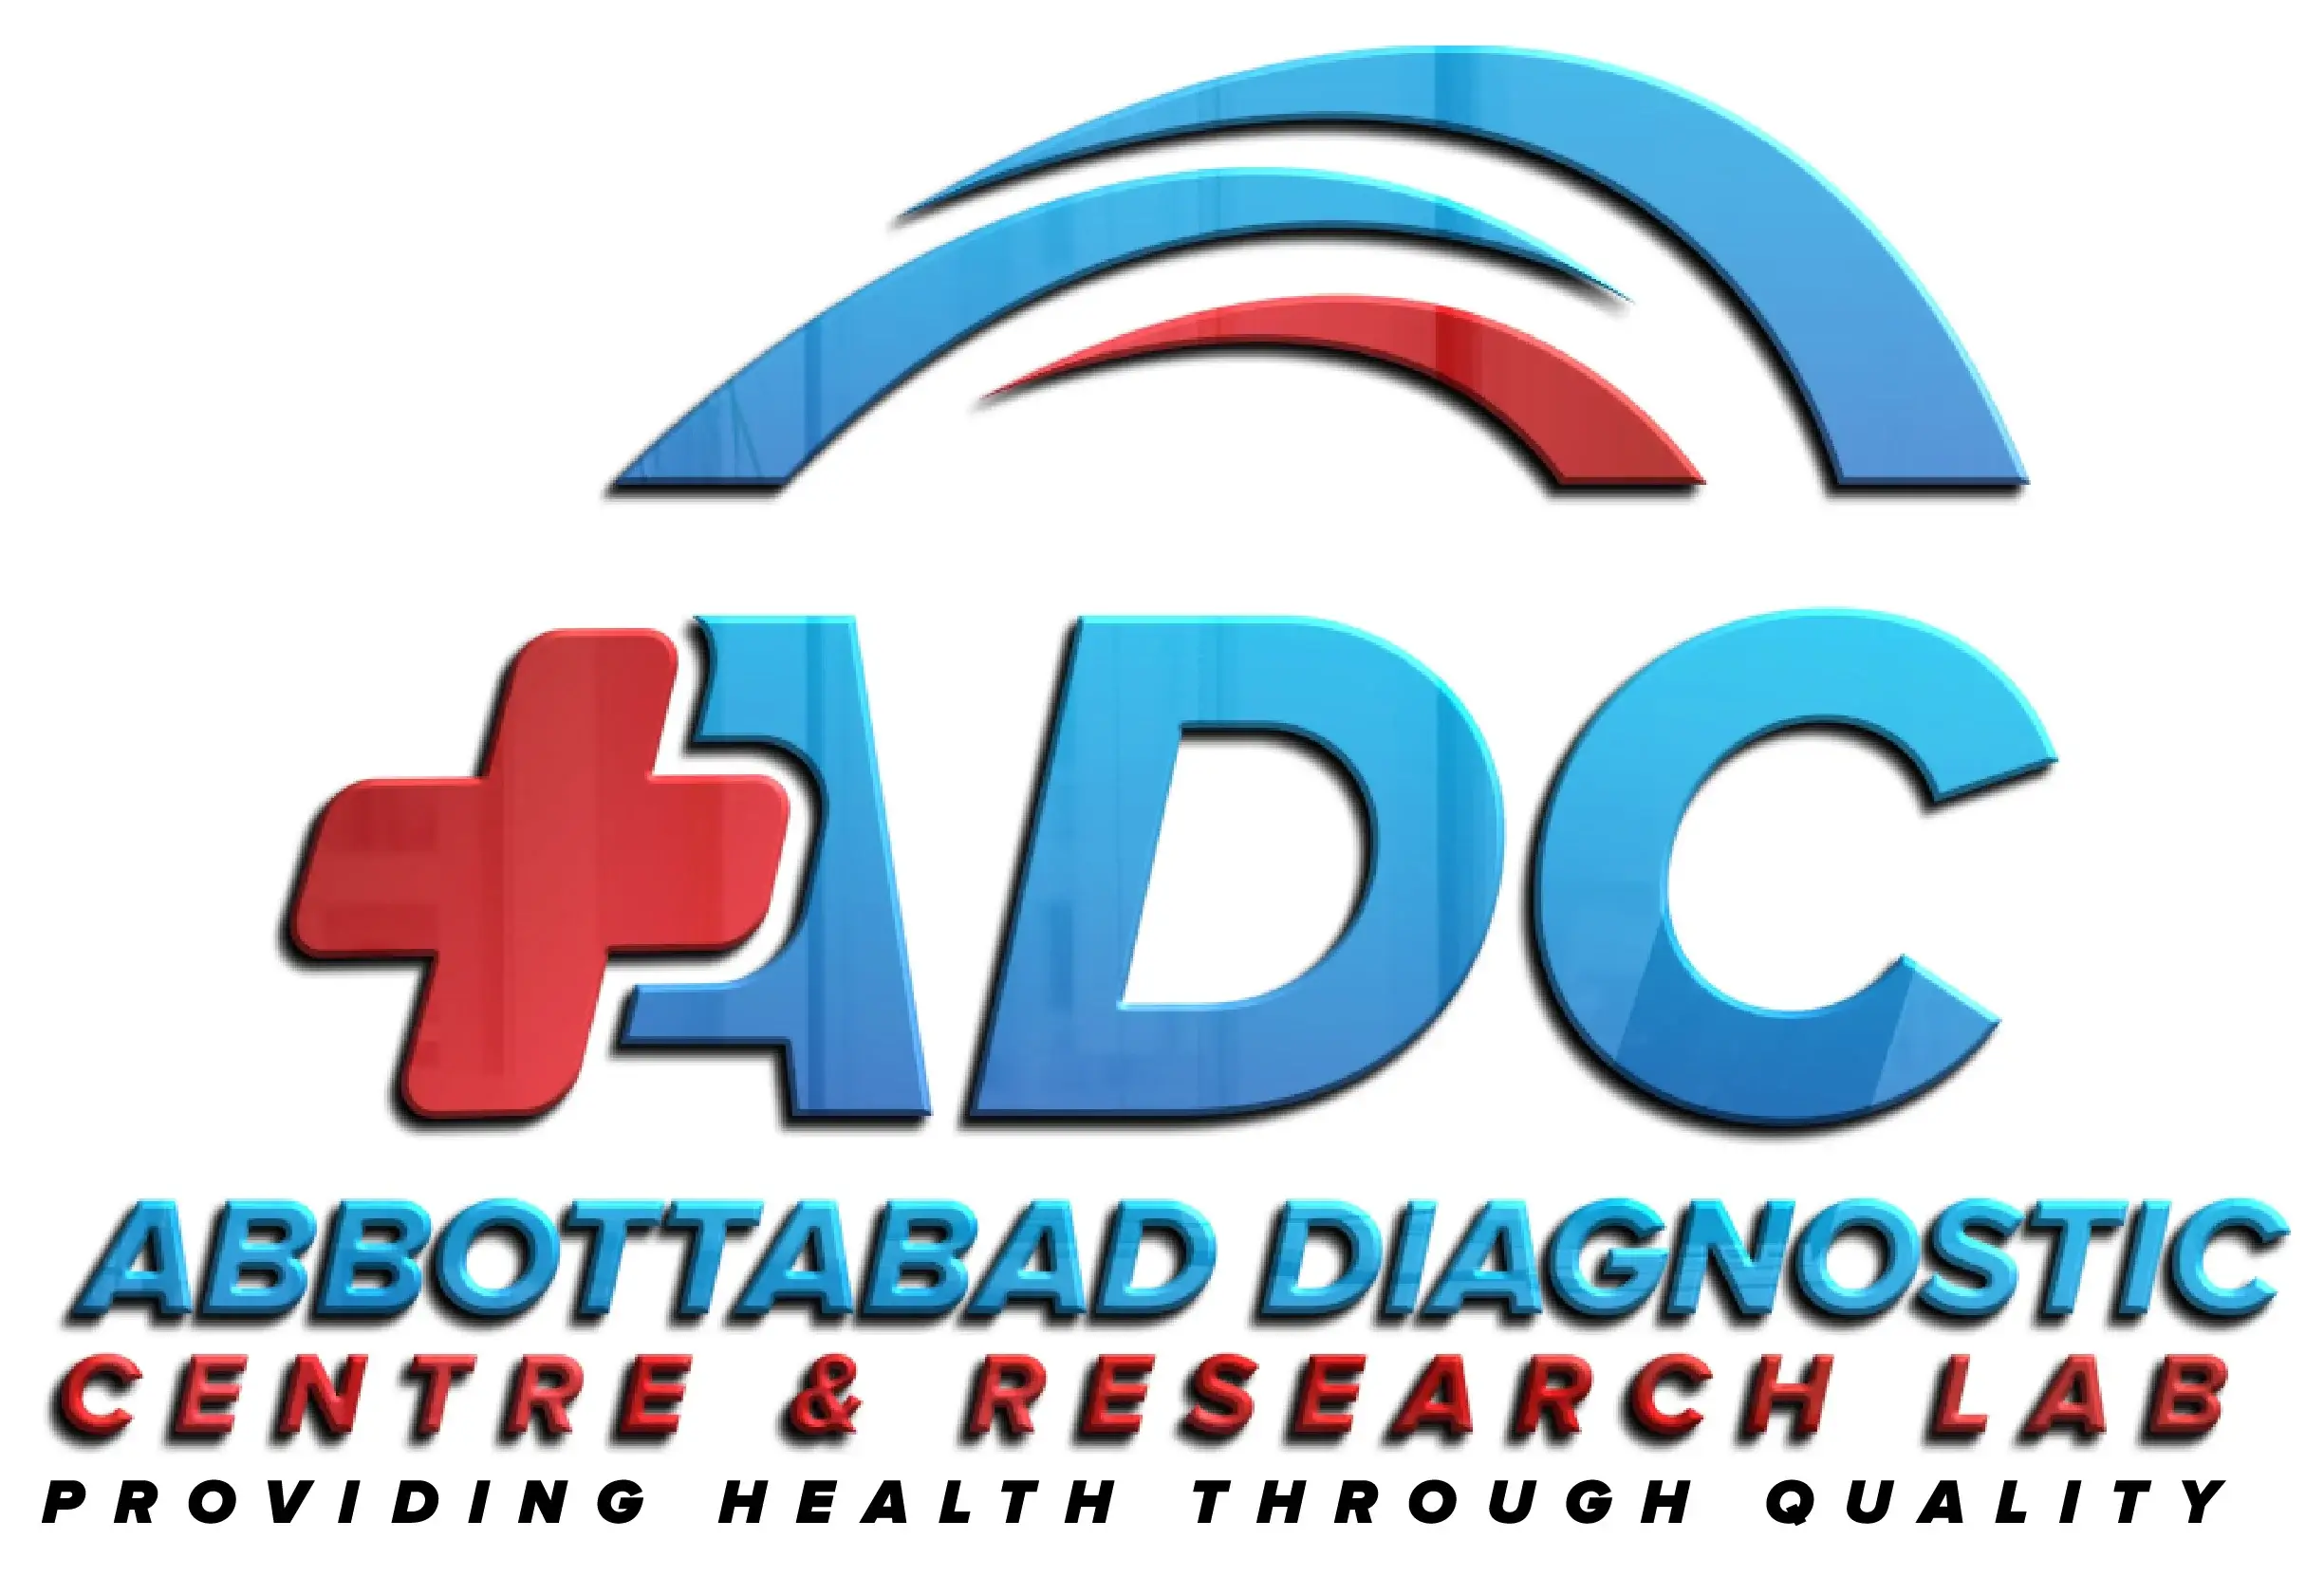 Abbottabad Diagnostic Centre